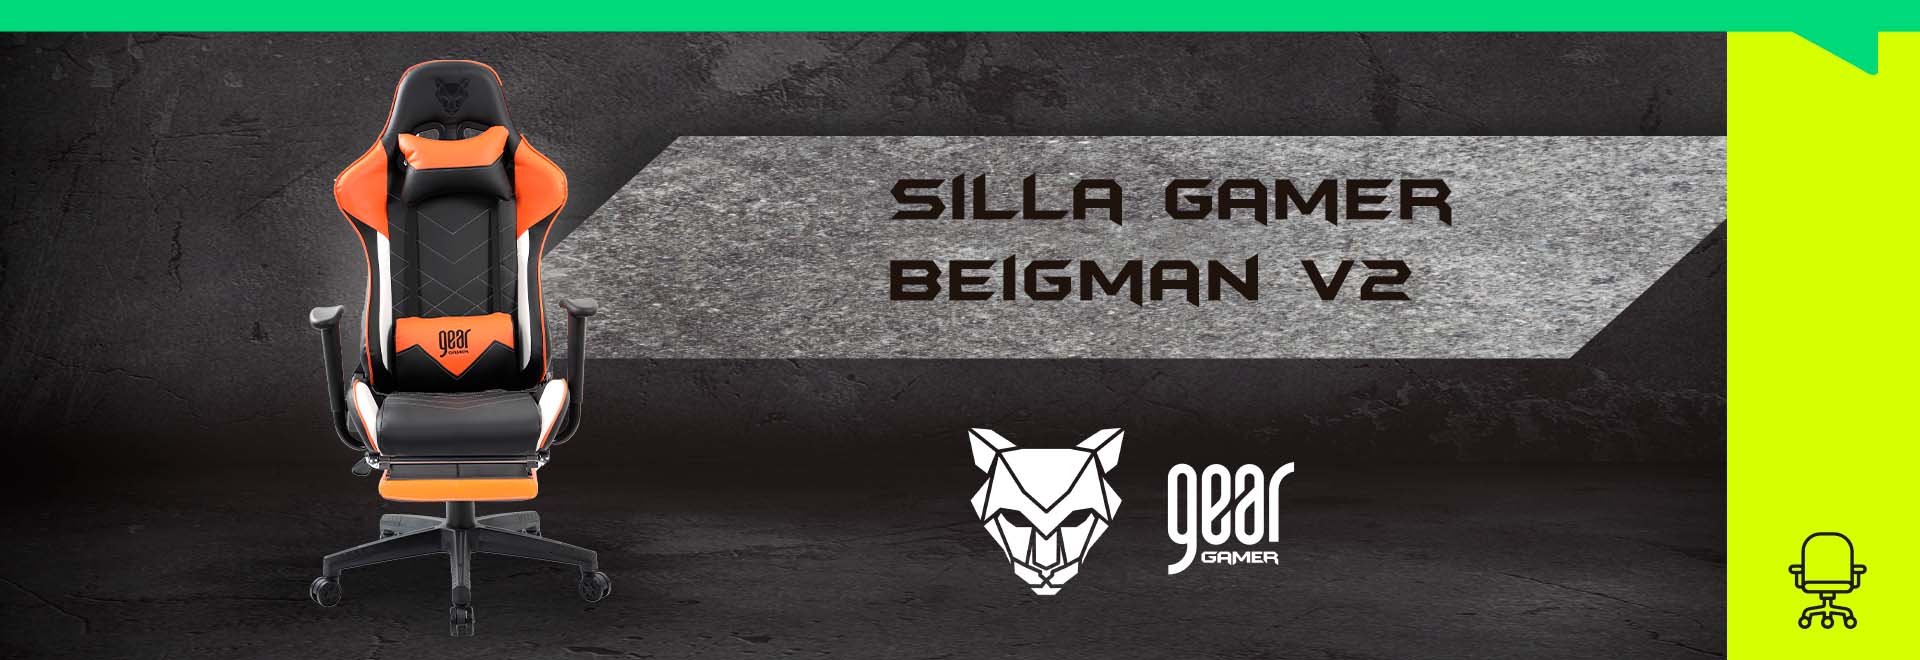 sillas-gear-gamer-beigman